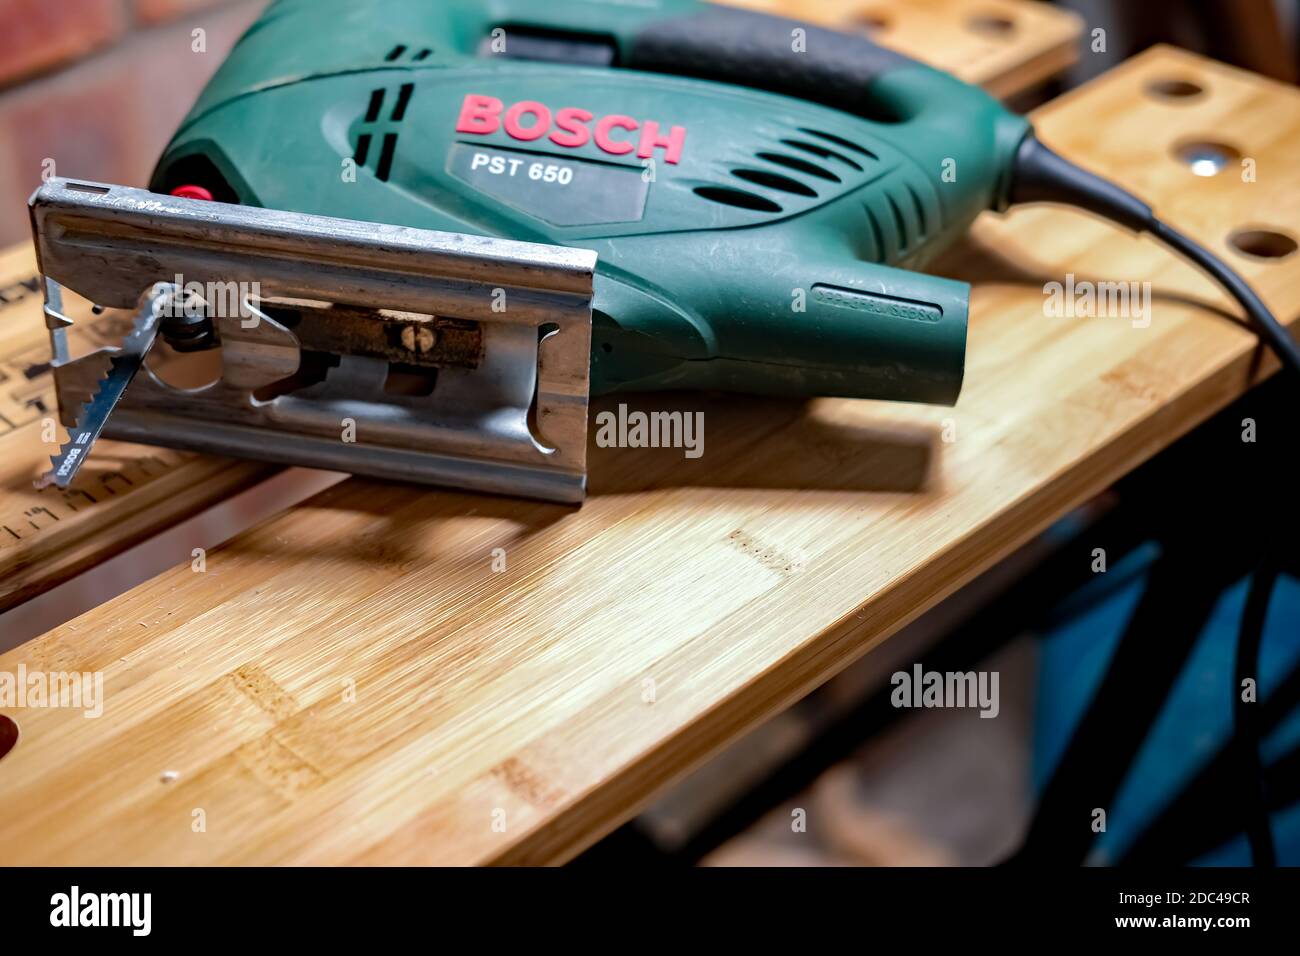 https://c8.alamy.com/comp/2DC49CR/norwich-norfolk-uk-november-17-2020-an-illustrative-photo-of-a-bosch-handheld-power-jigsaw-on-a-black-decker-workmate-bench-2DC49CR.jpg